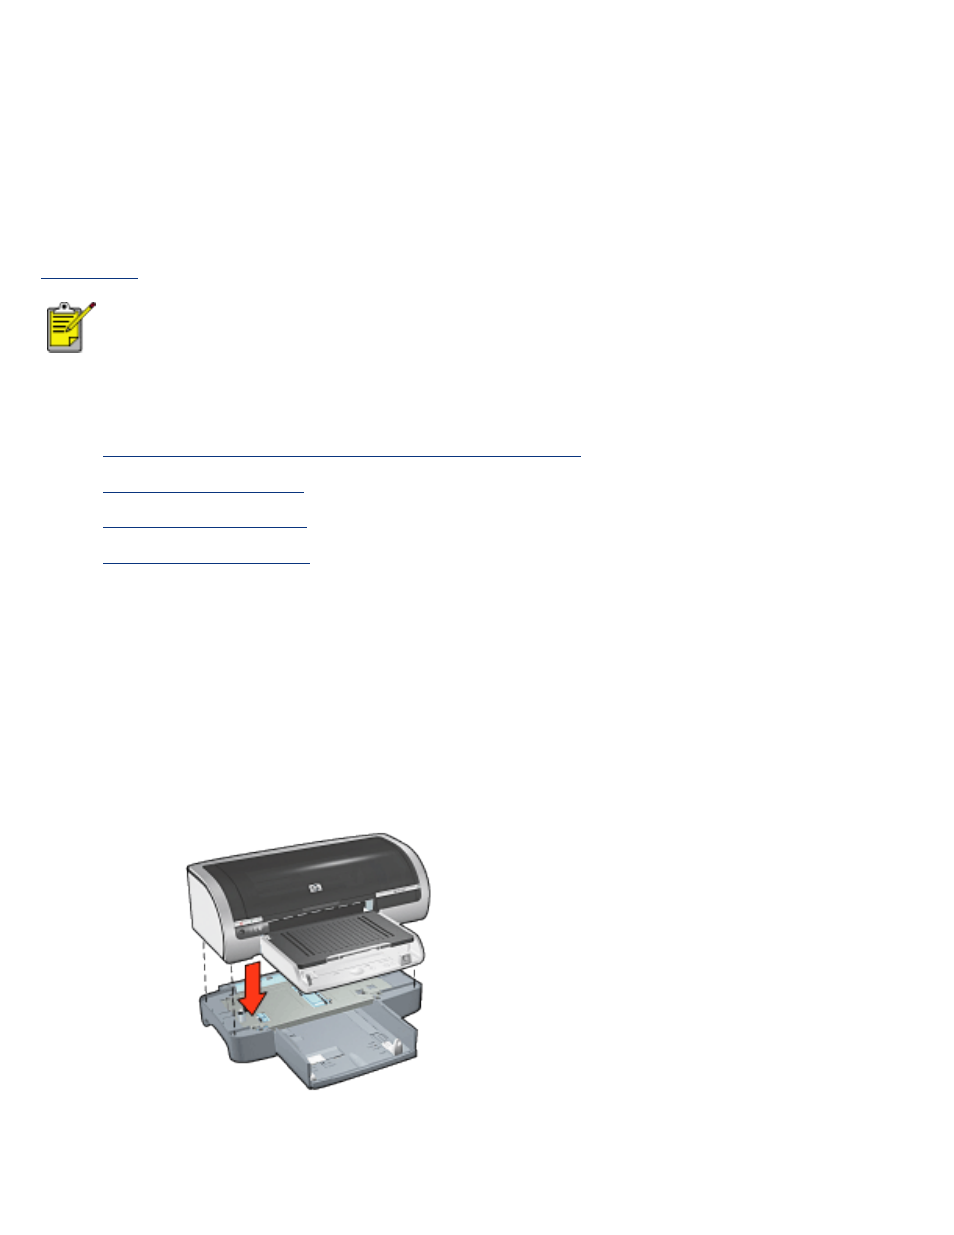 Sheet plain paper tray accessory | HP Deskjet 5650 User Manual | Page